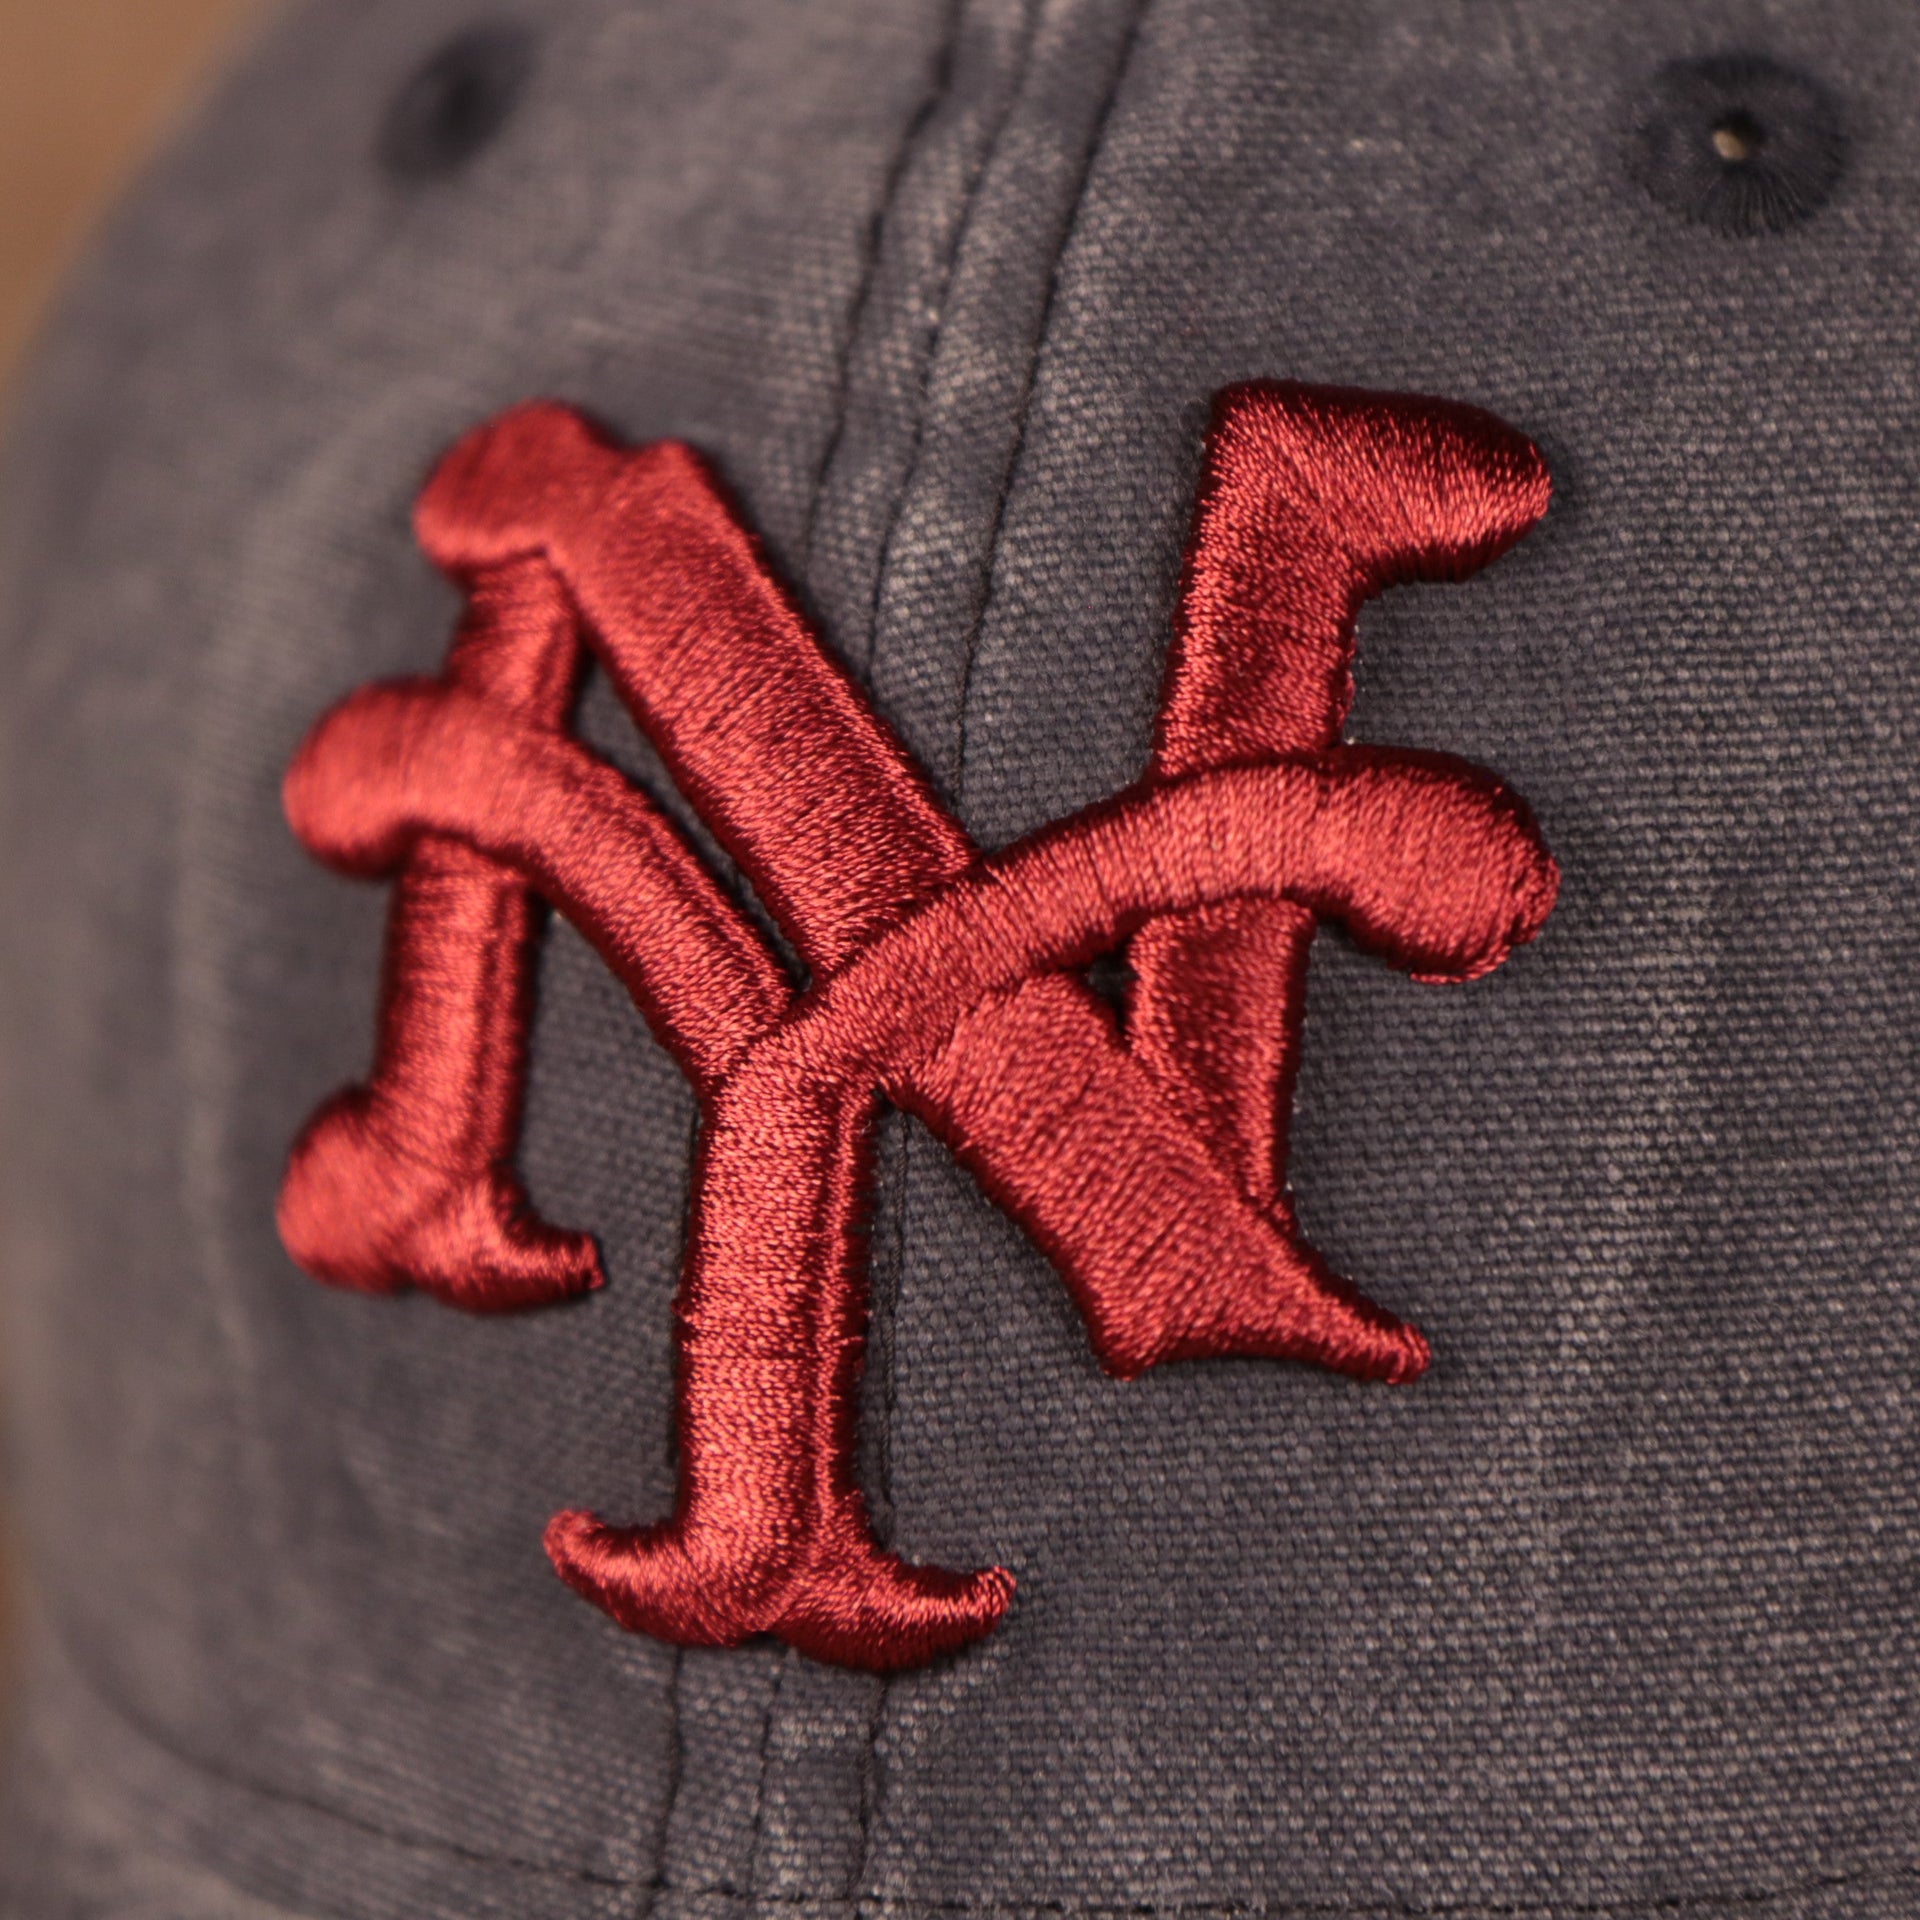 logo shot on the New York Cubans Negro Leagues Vintage 9Twenty Denim Dad Hat